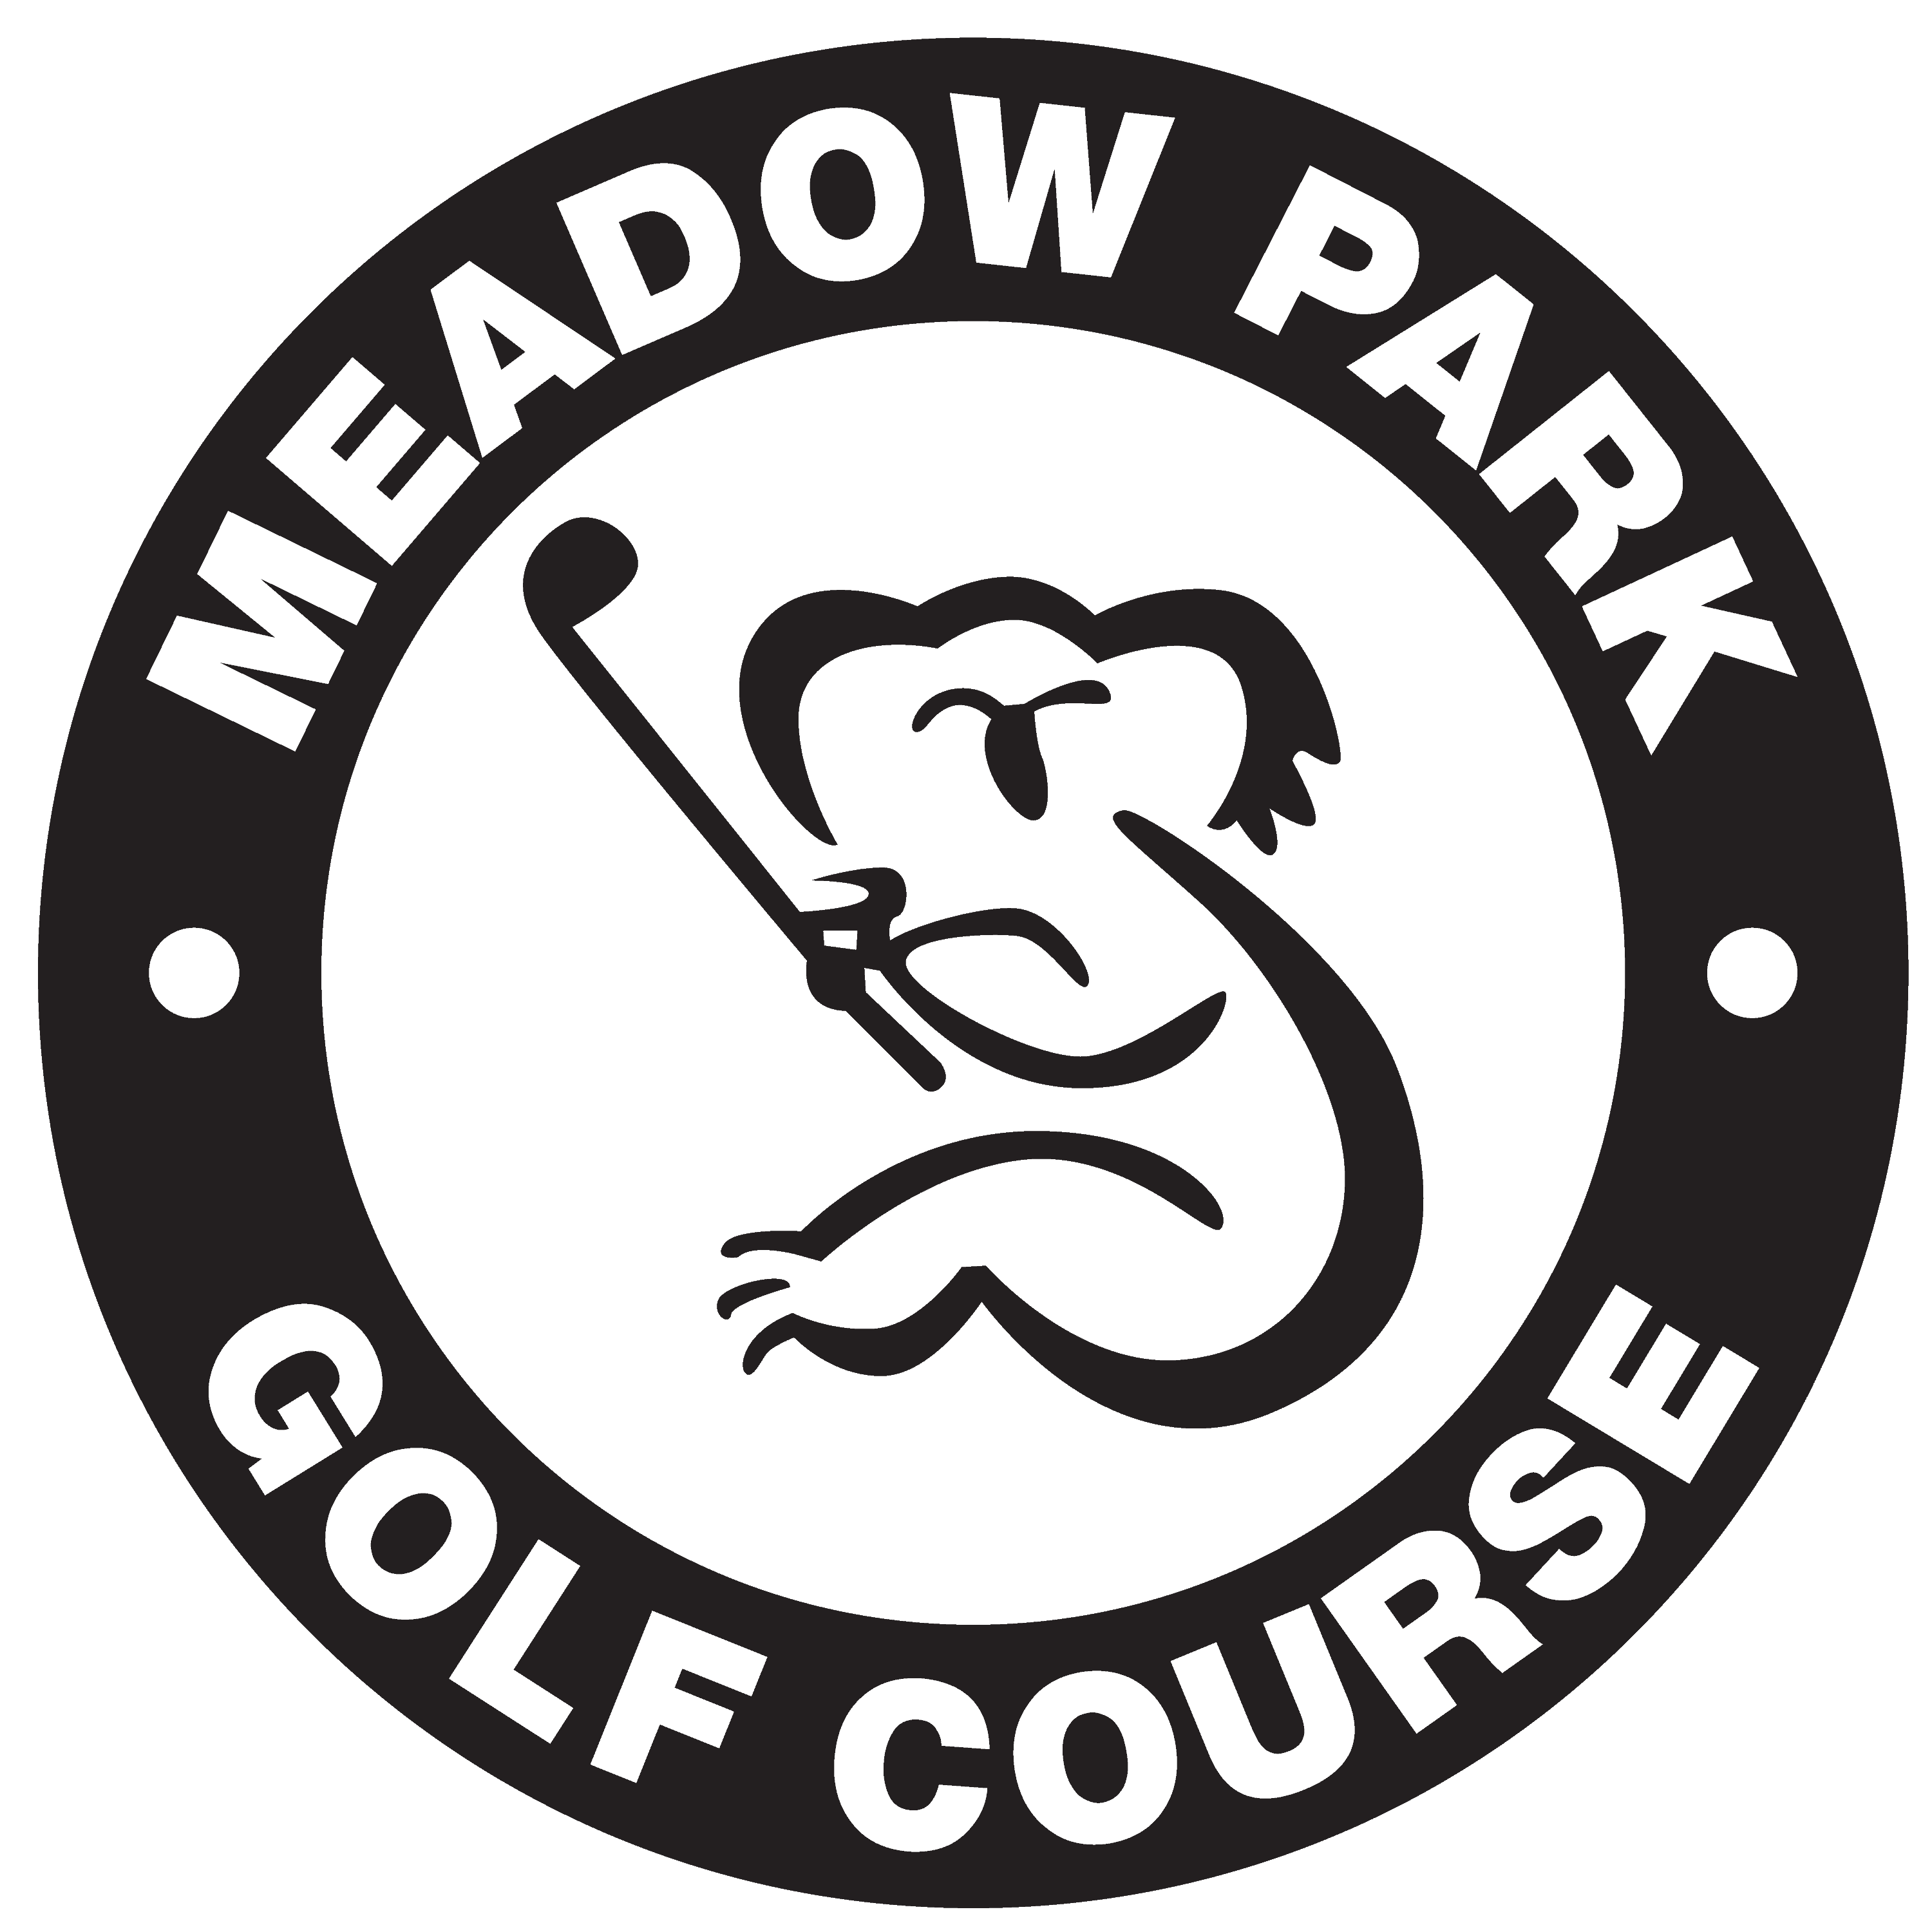 Meadow Park Golf Course Testimonial